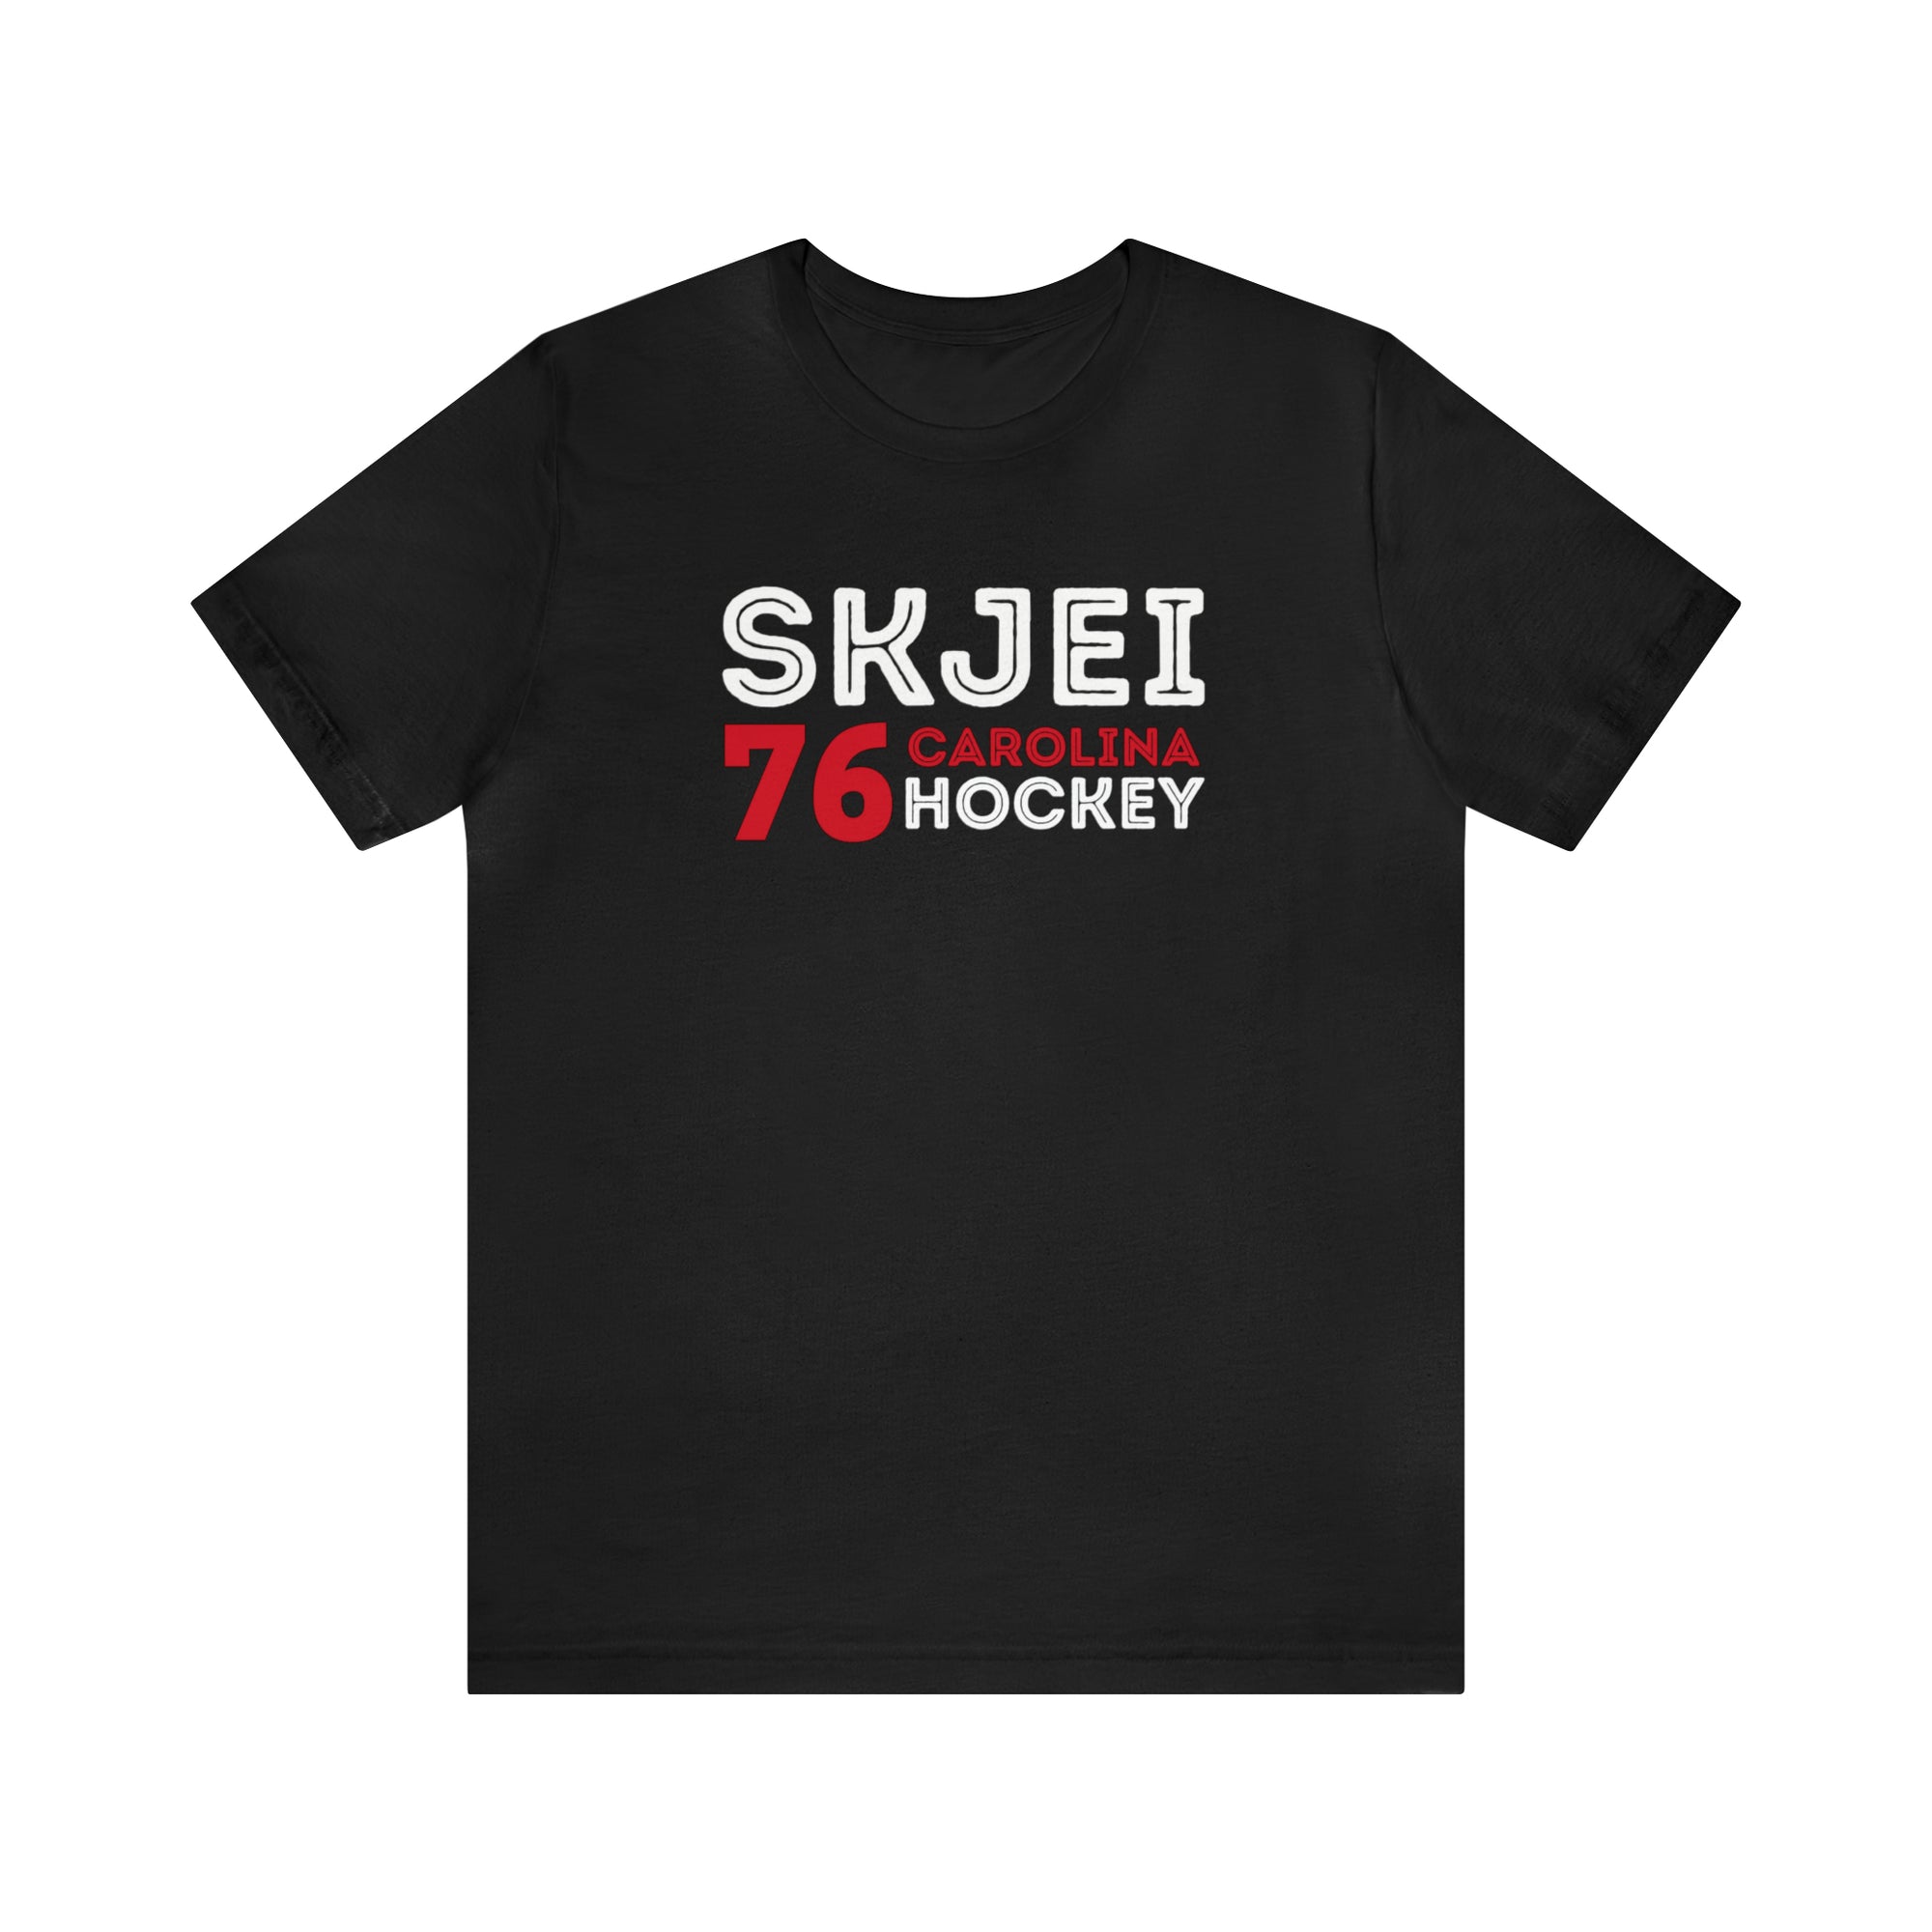 Brady Skjei T-Shirt